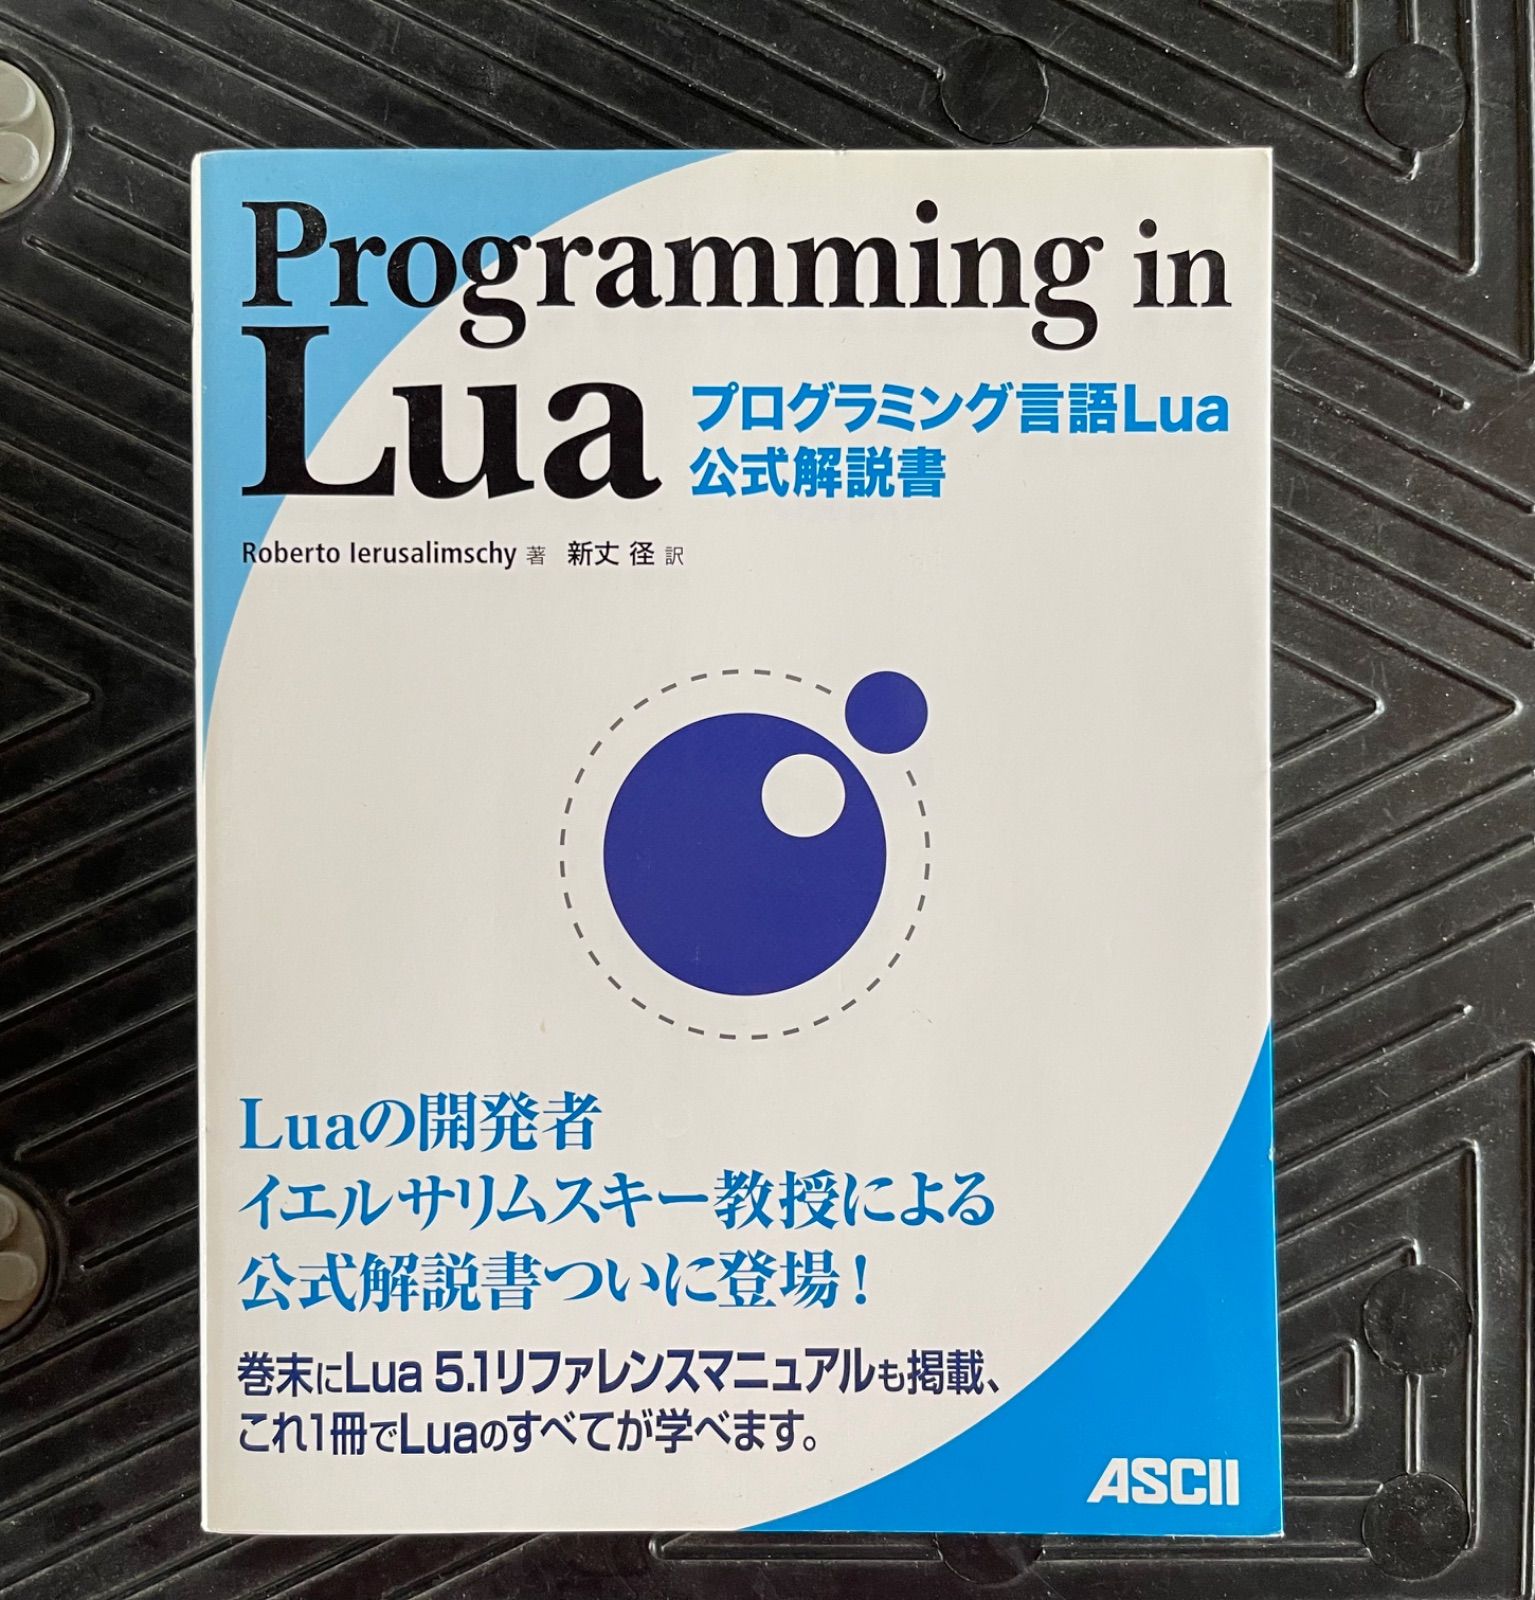 Programming in Lua プログラミング言語Lua公式解説書 - コンピュータ